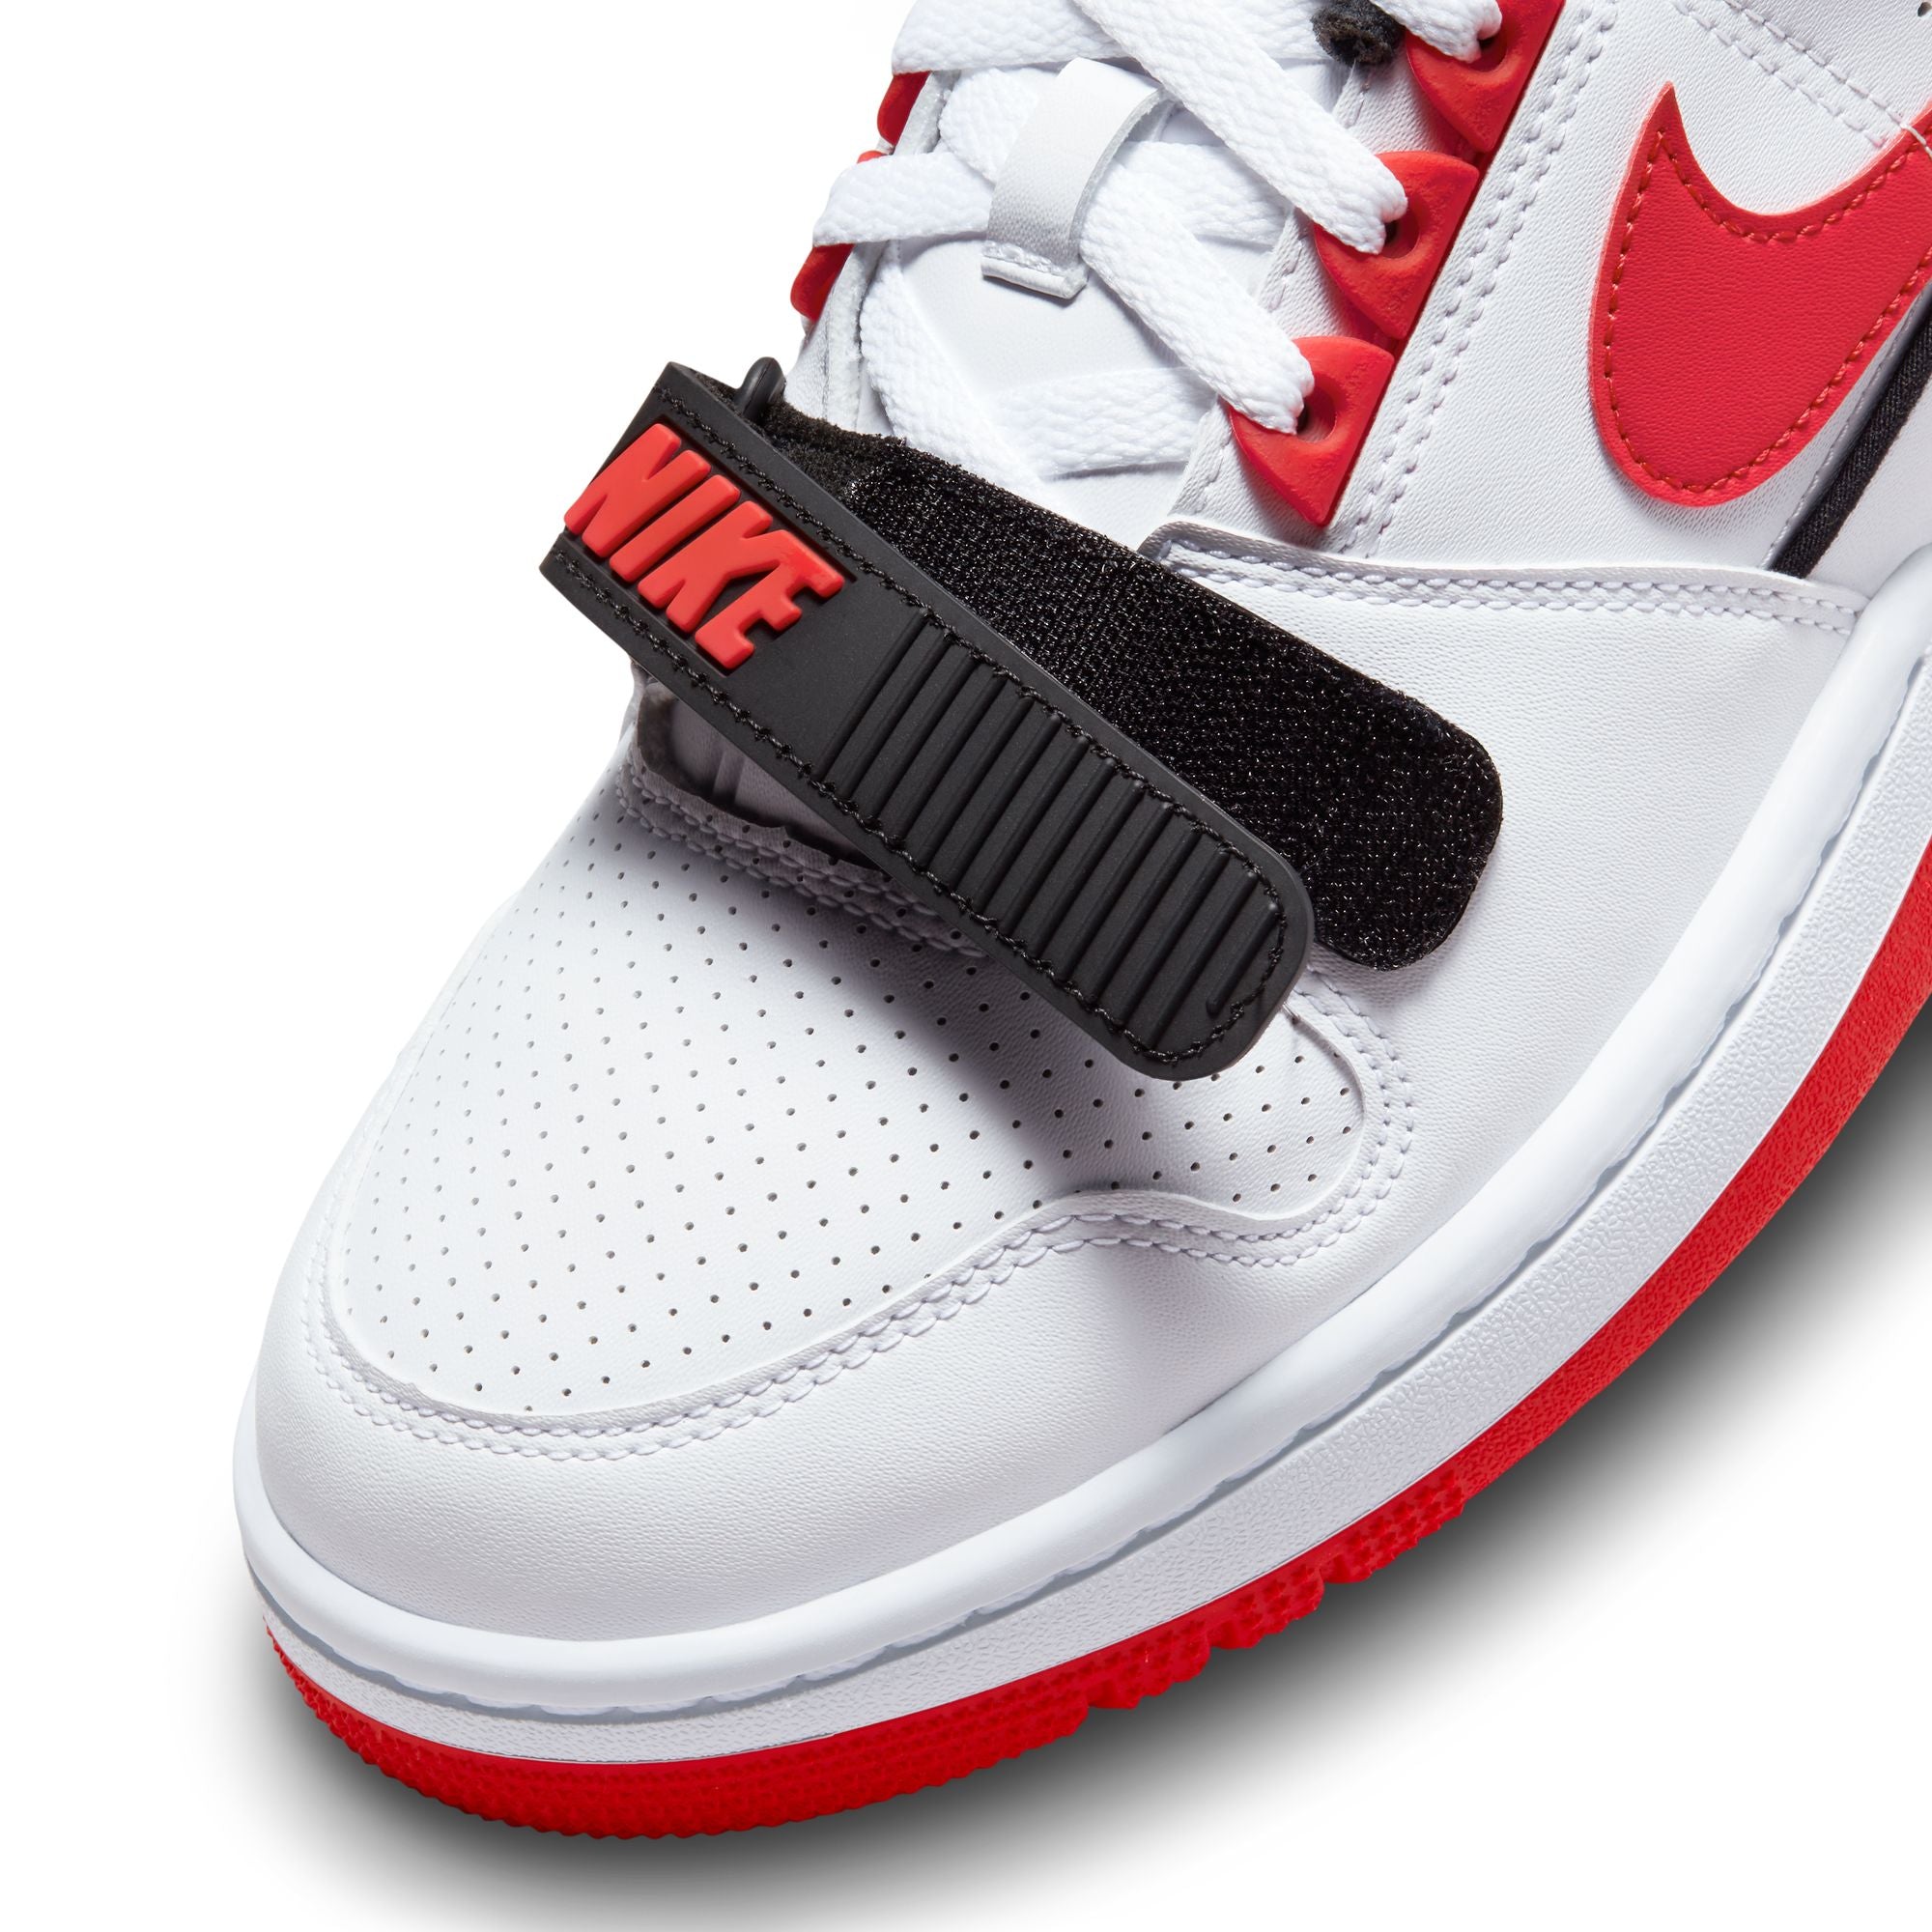 NIKE - Nike Aaf88 Sp Billie Eilish - (White/Fire Red-Neutral Grey) view 11